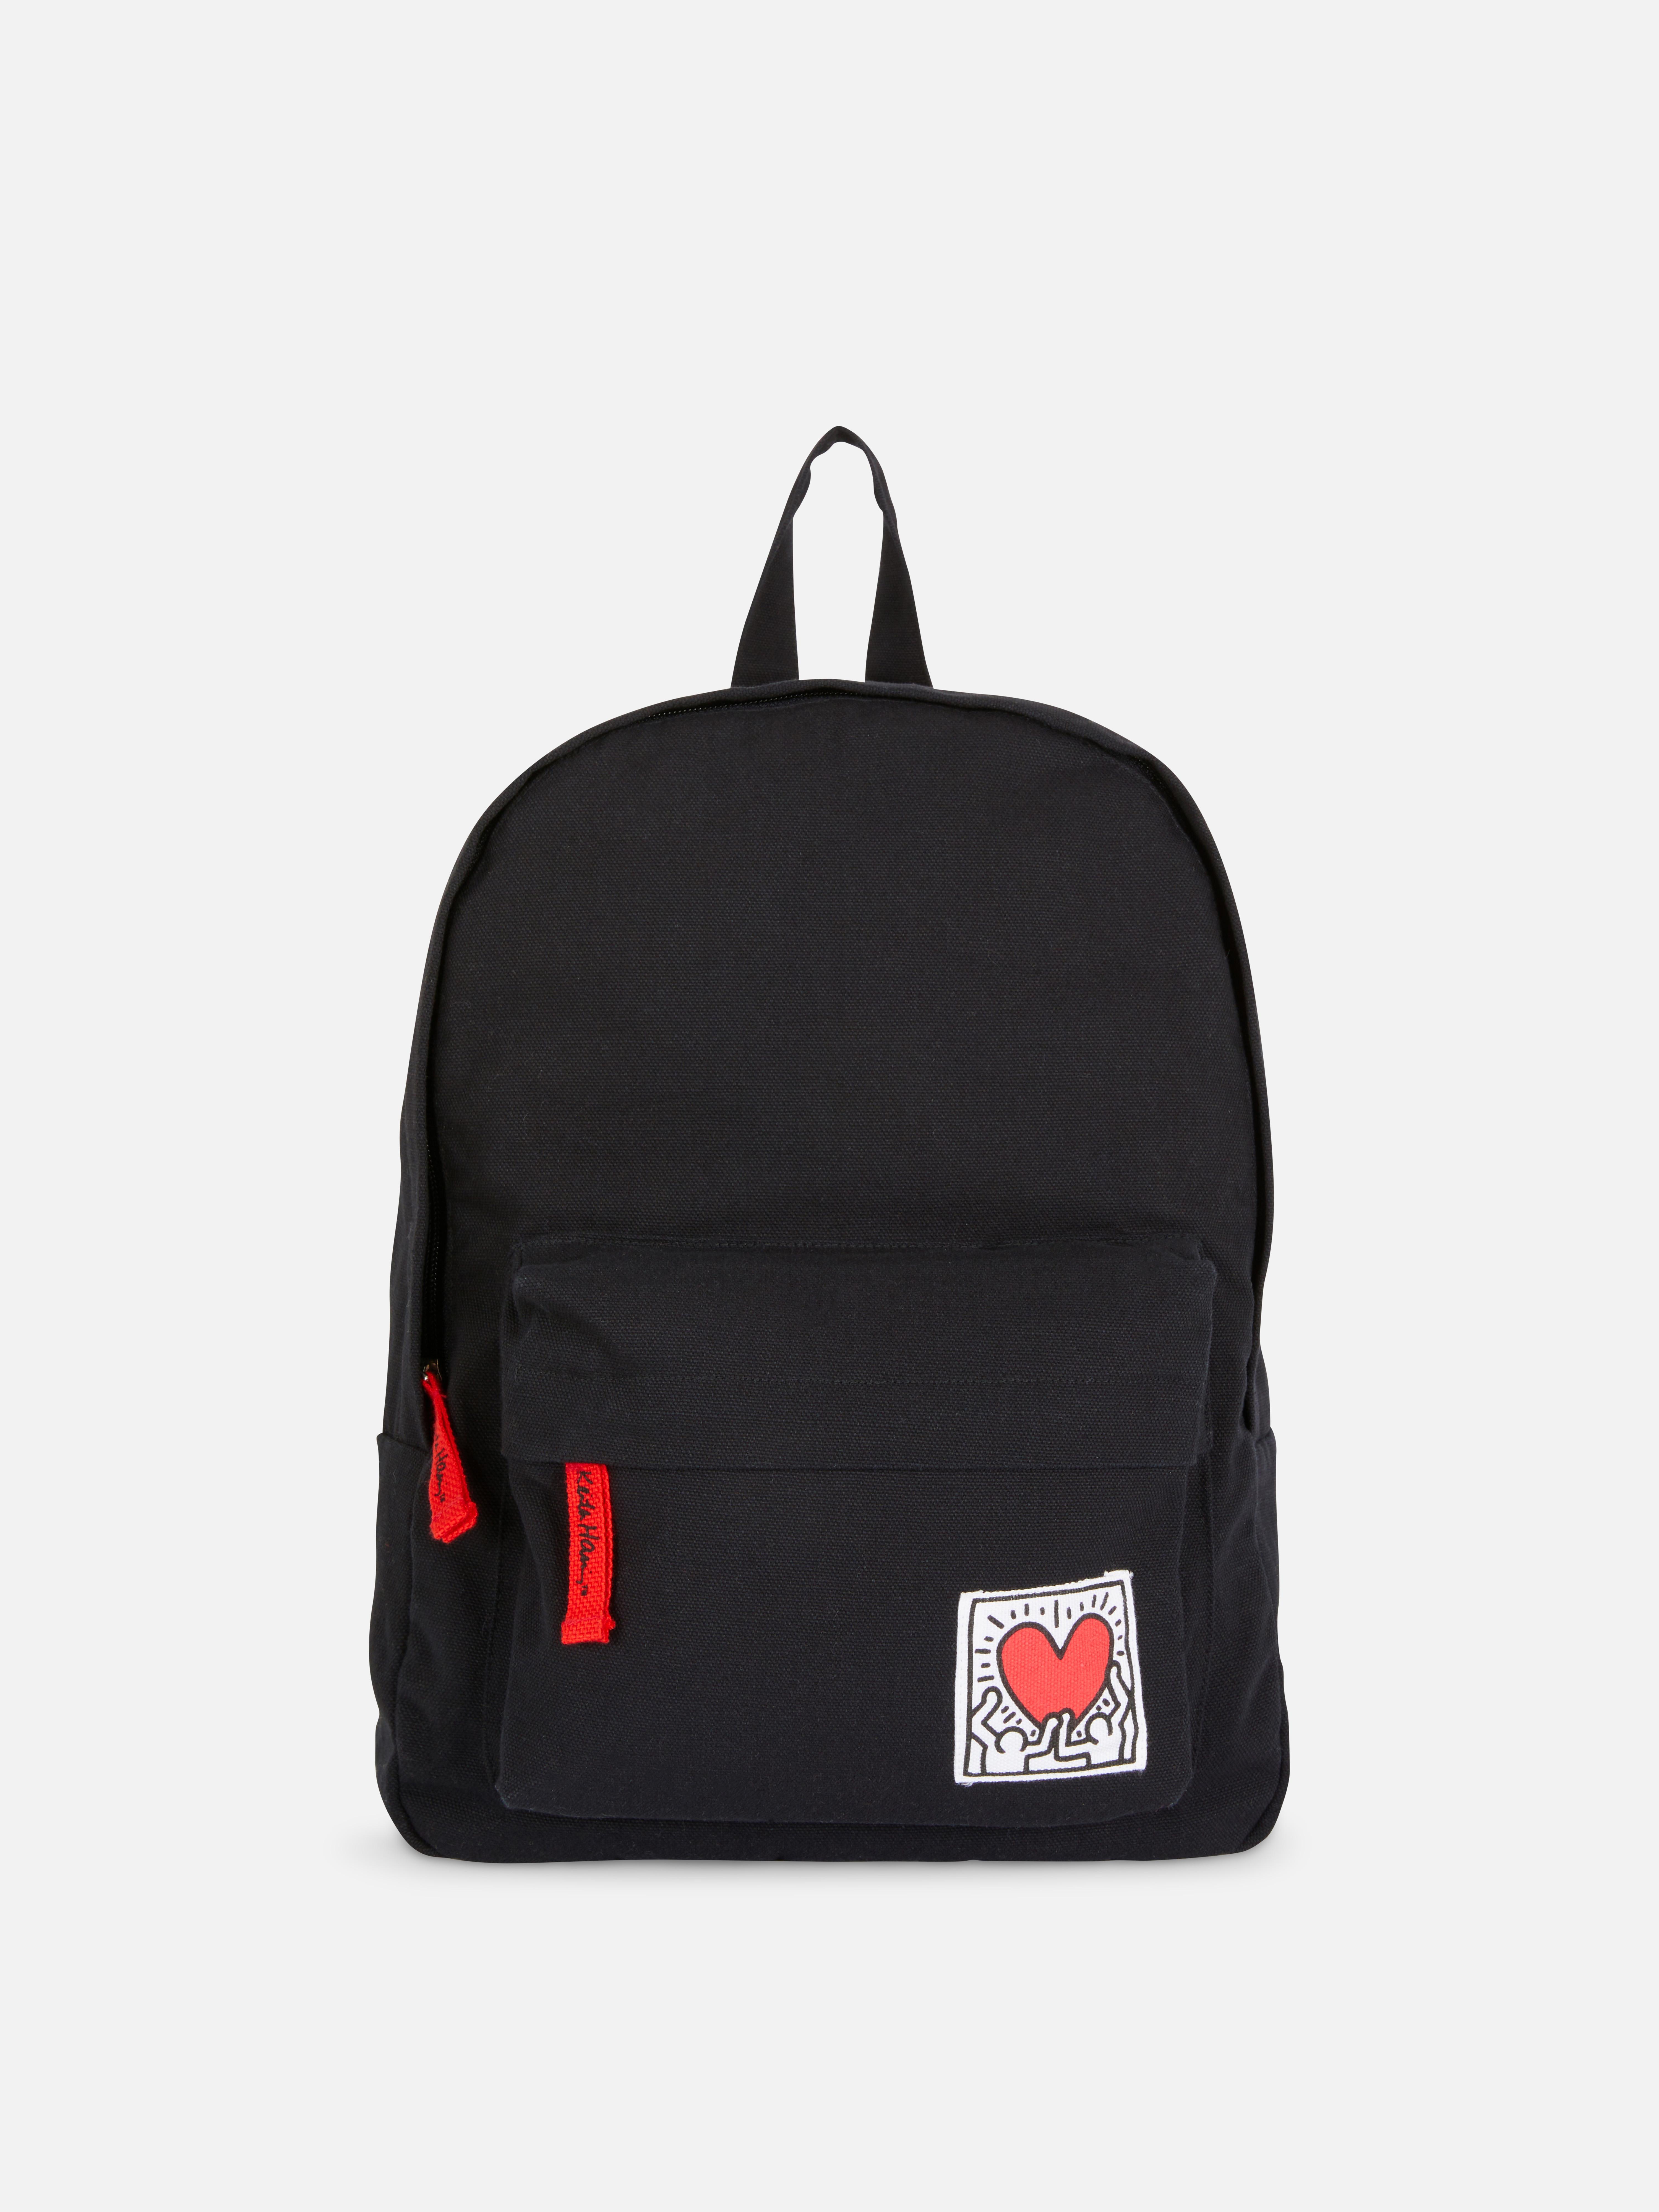 Keith Haring Backpack